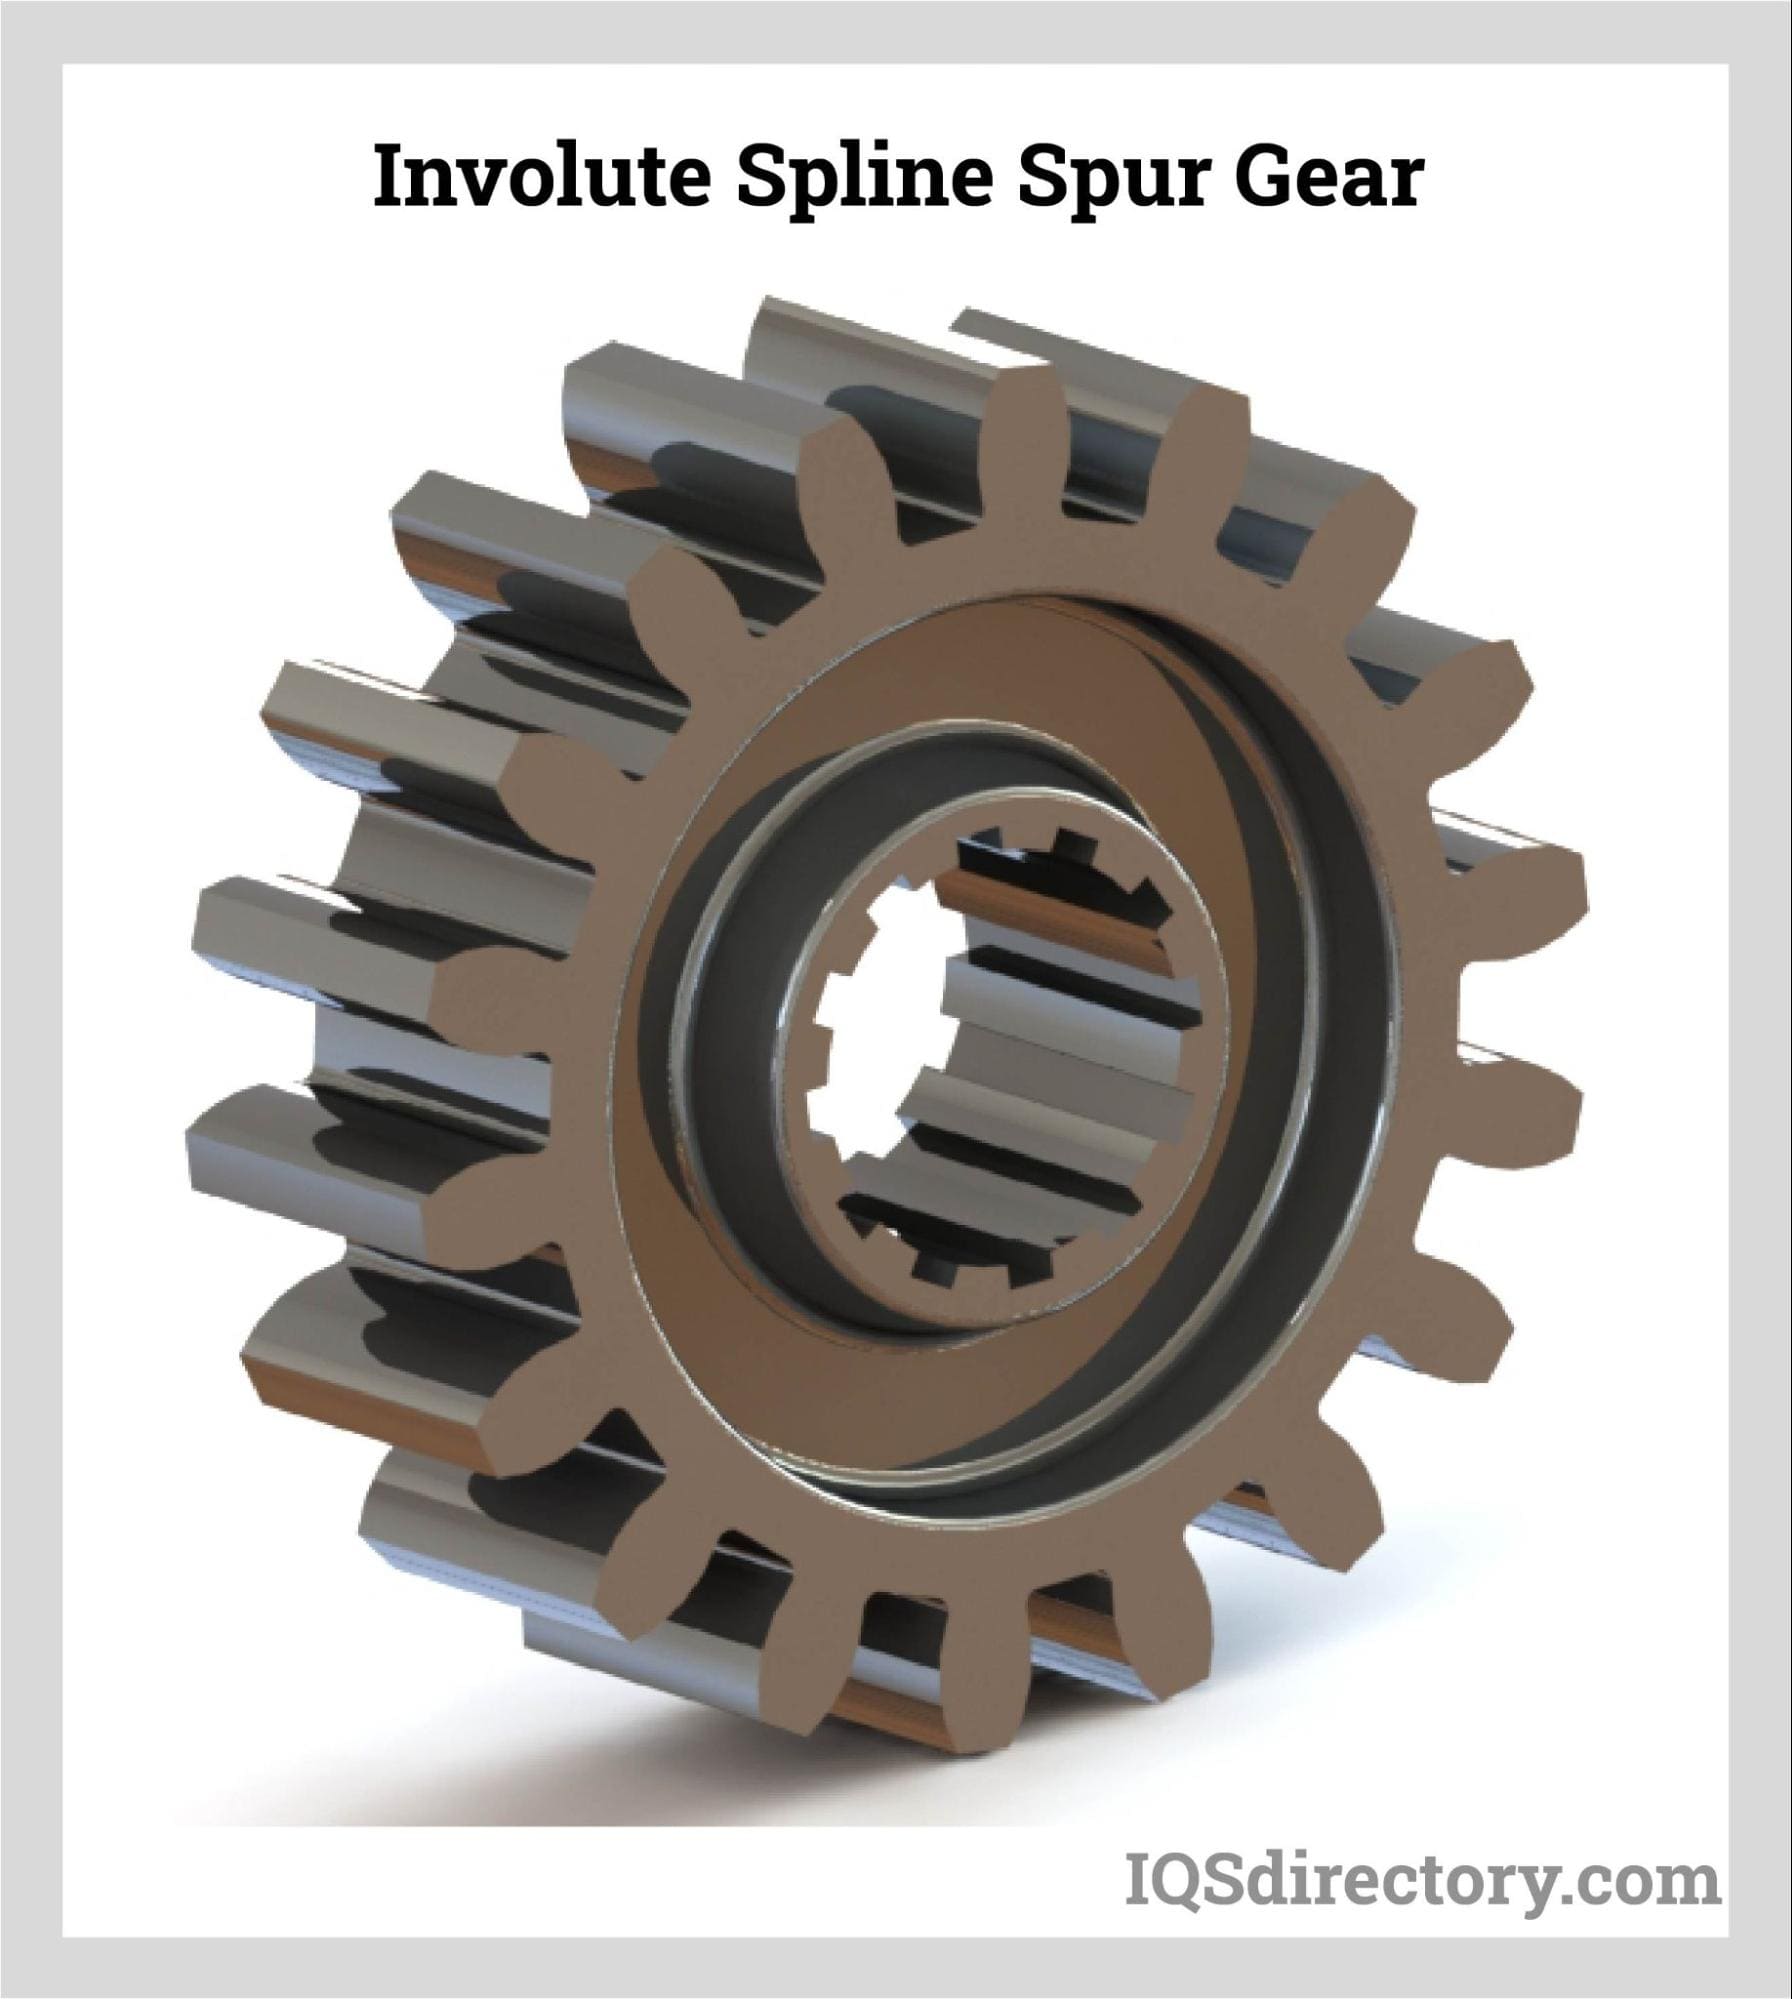 Involute Spline Spur Gear